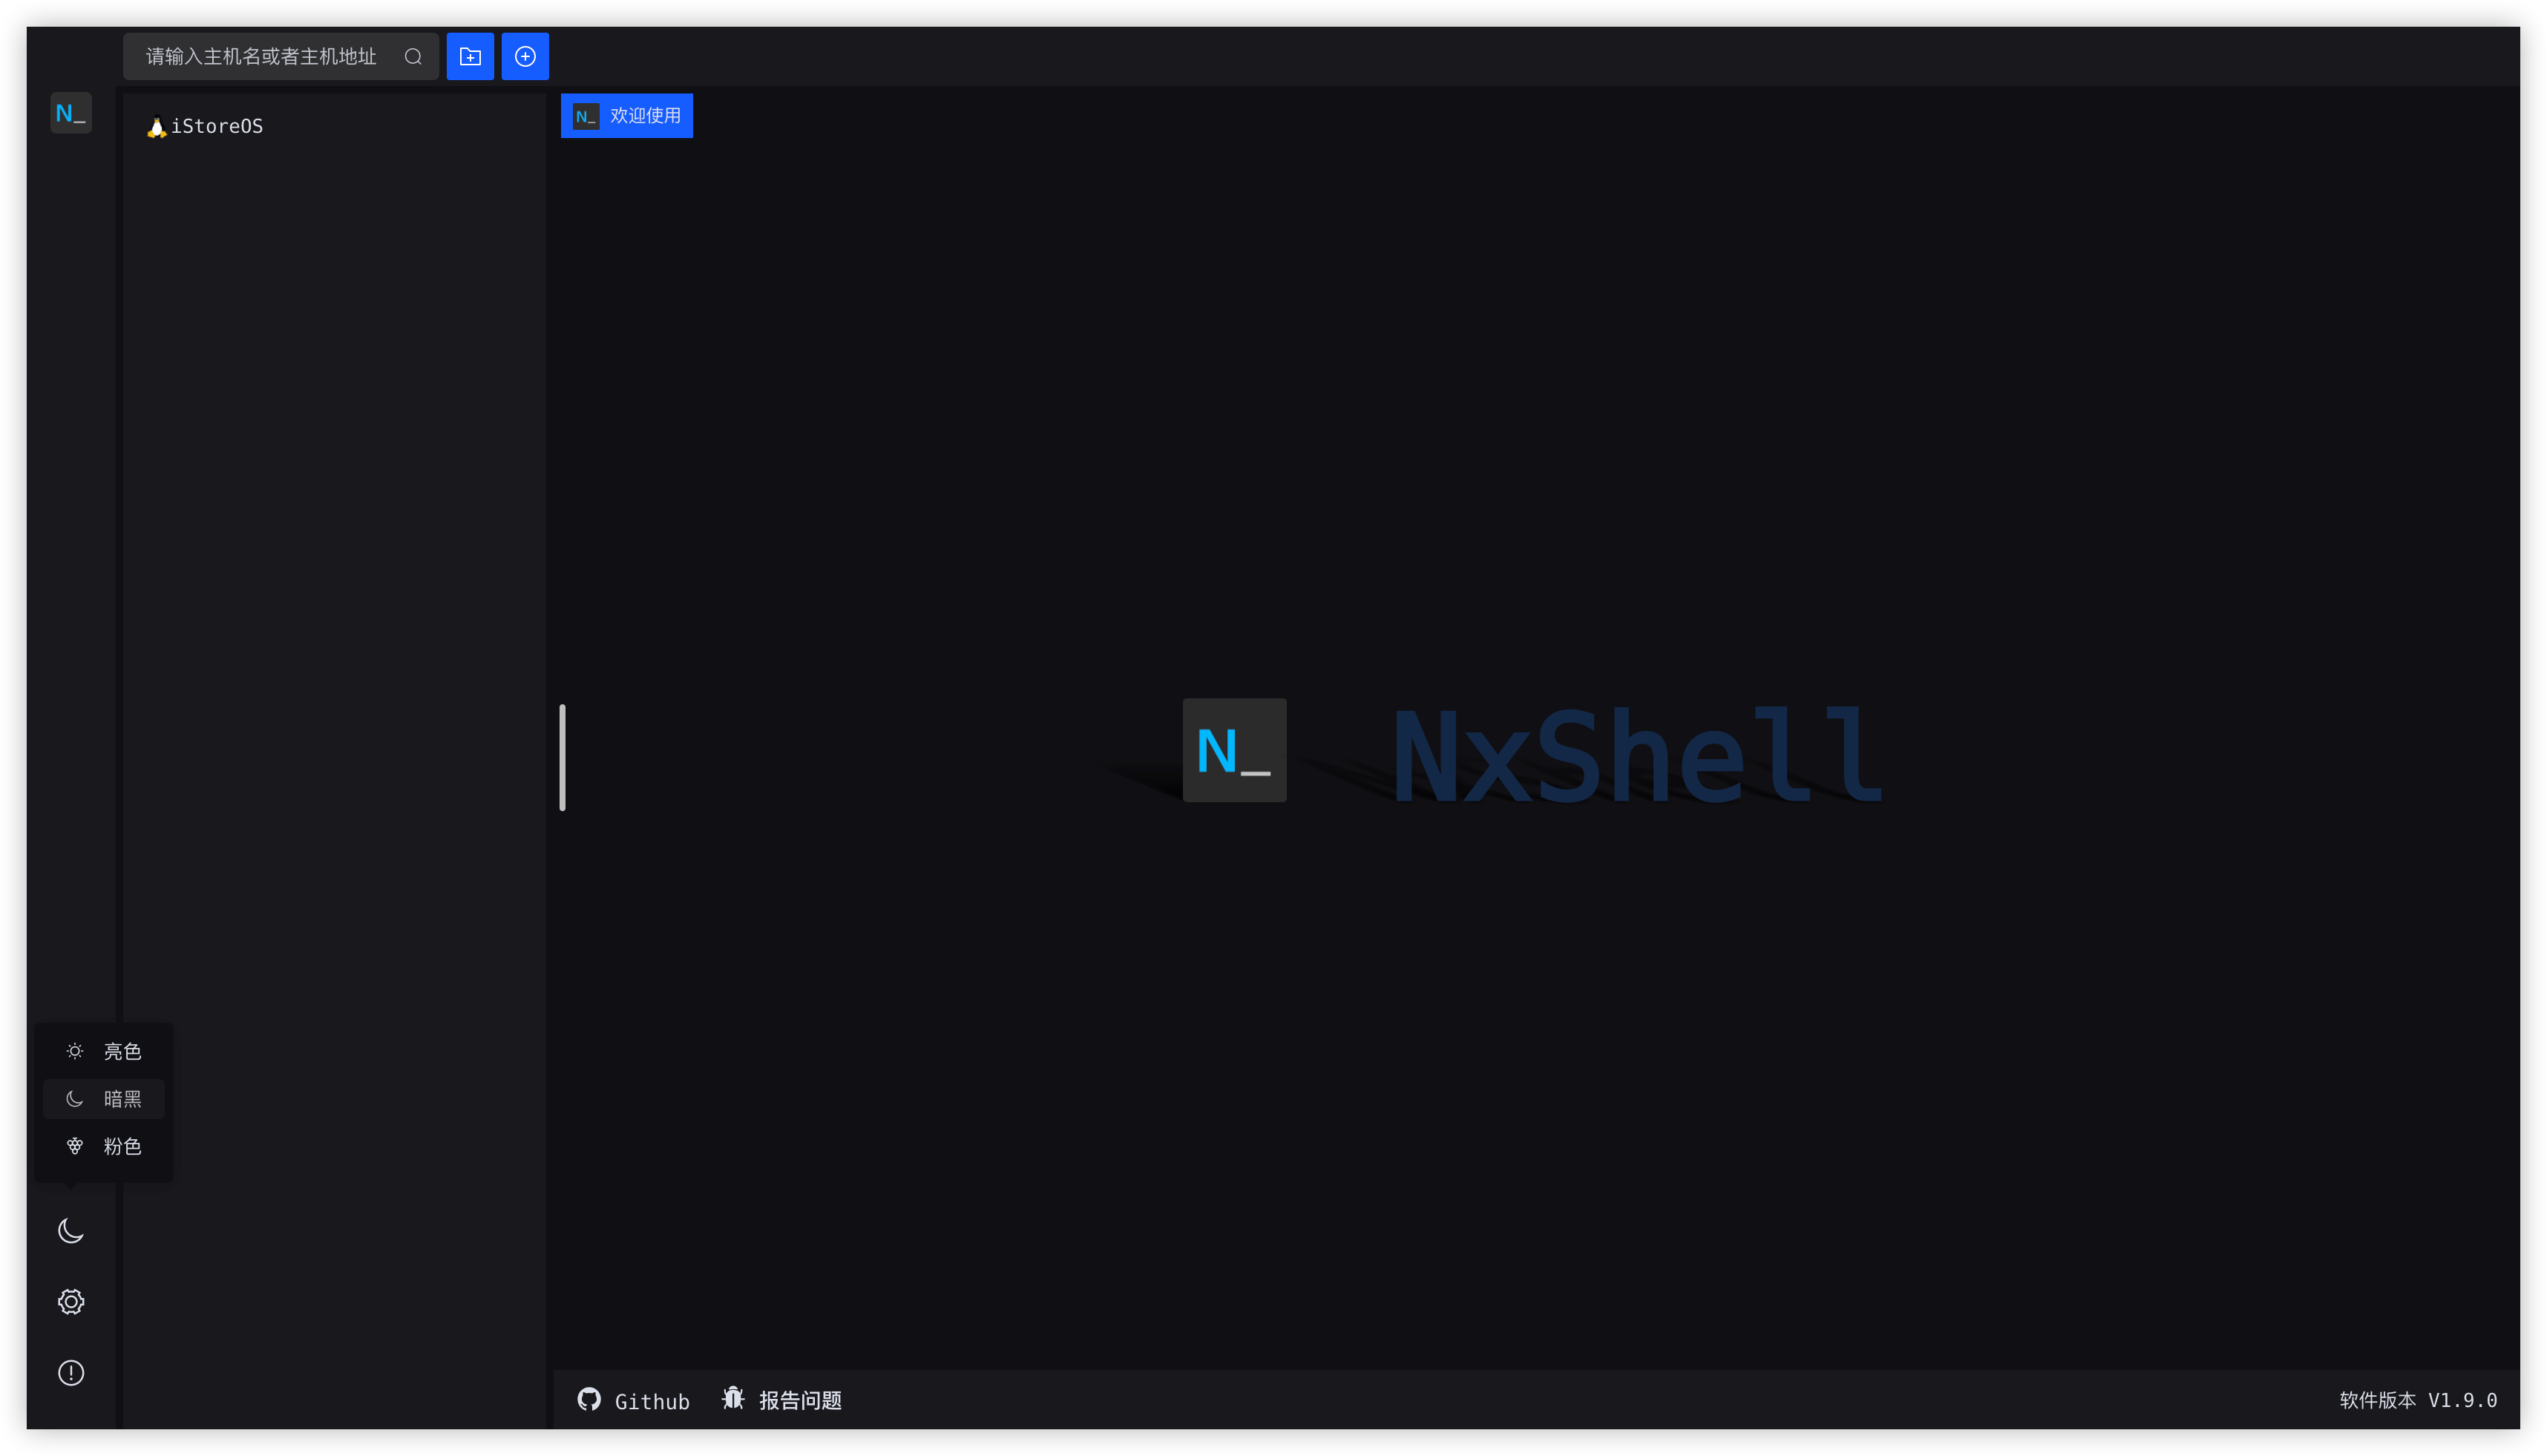 NXshell